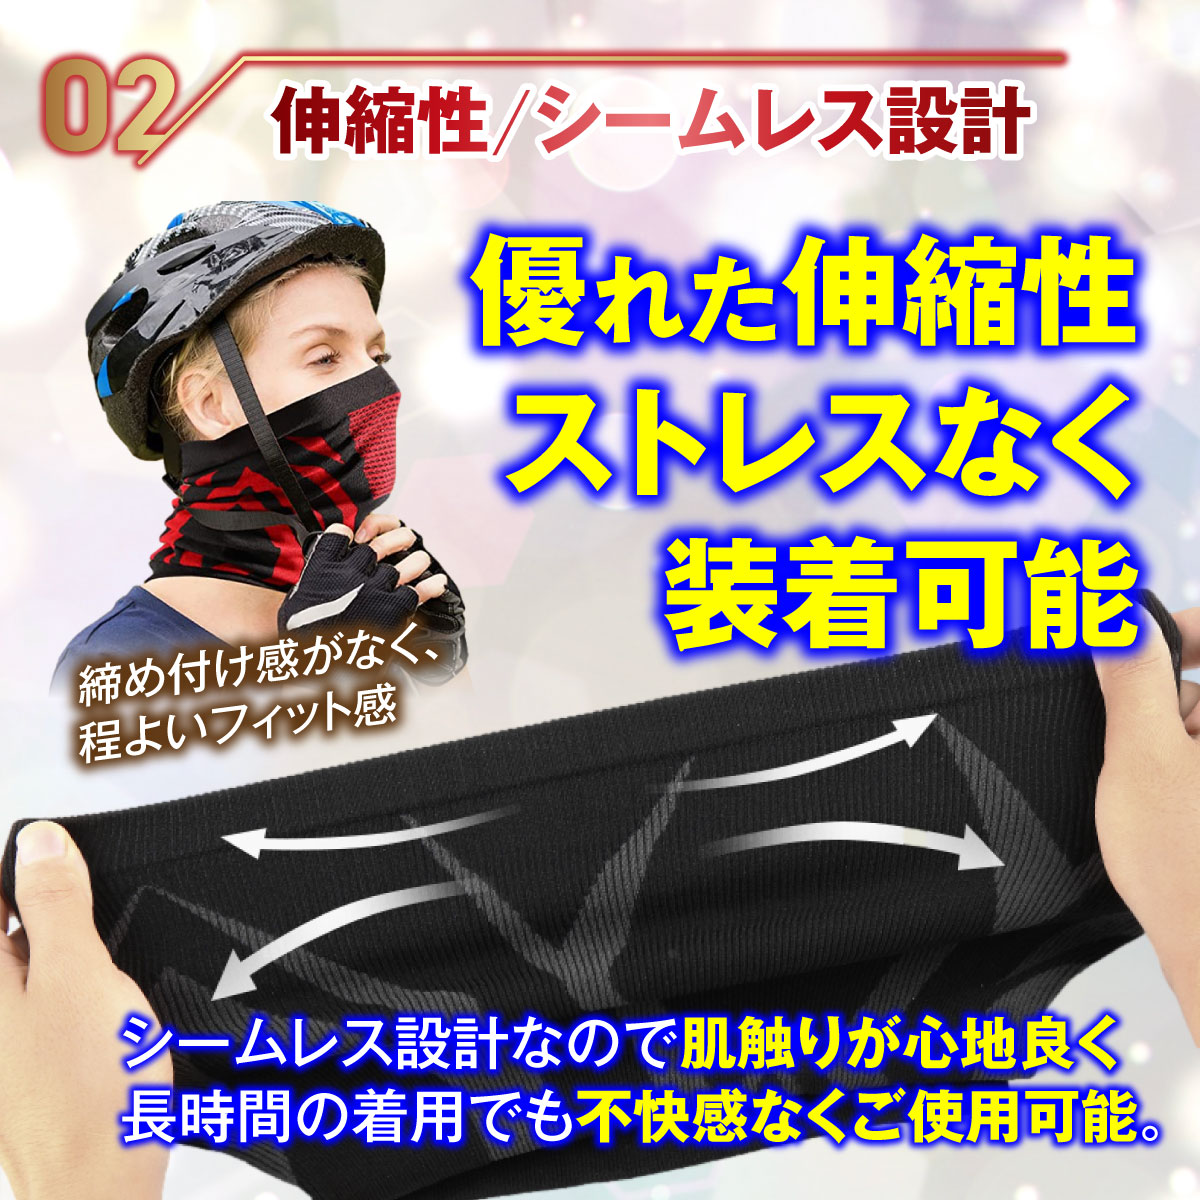  защита горла "neck warmer" мужской лицо утеплитель маска маска для лица защищающий от холода сноуборд сноуборд зима женский мотоцикл теплый защищающий от холода маска . способ шея защита 